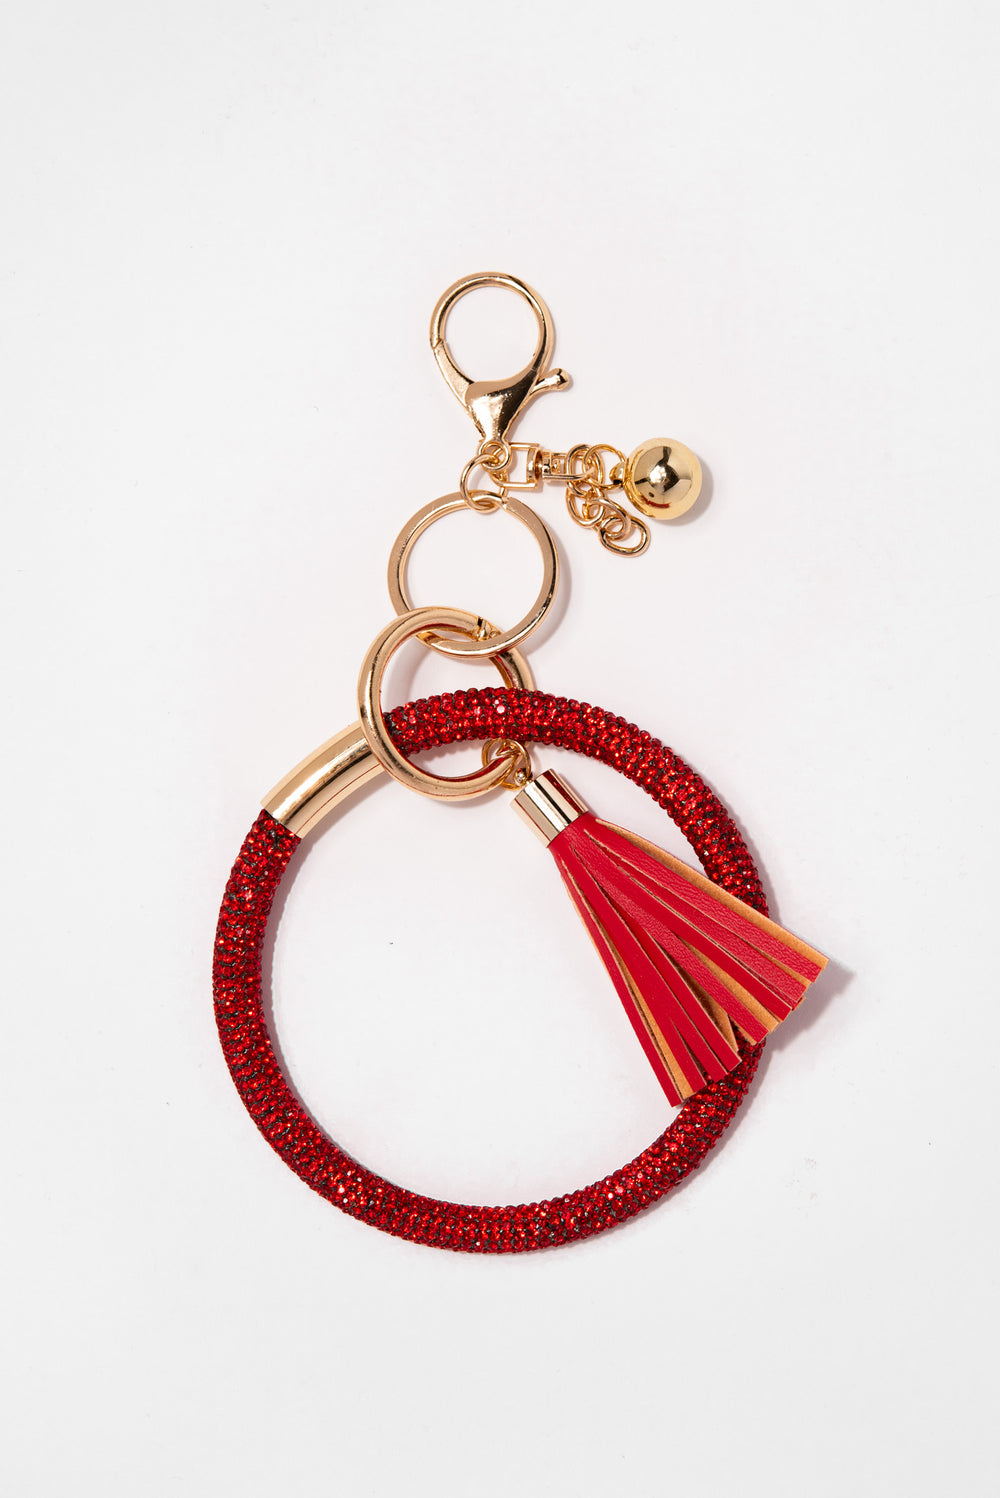 Rhinestone Wristlet Keyring Keychain with Tassel- Red